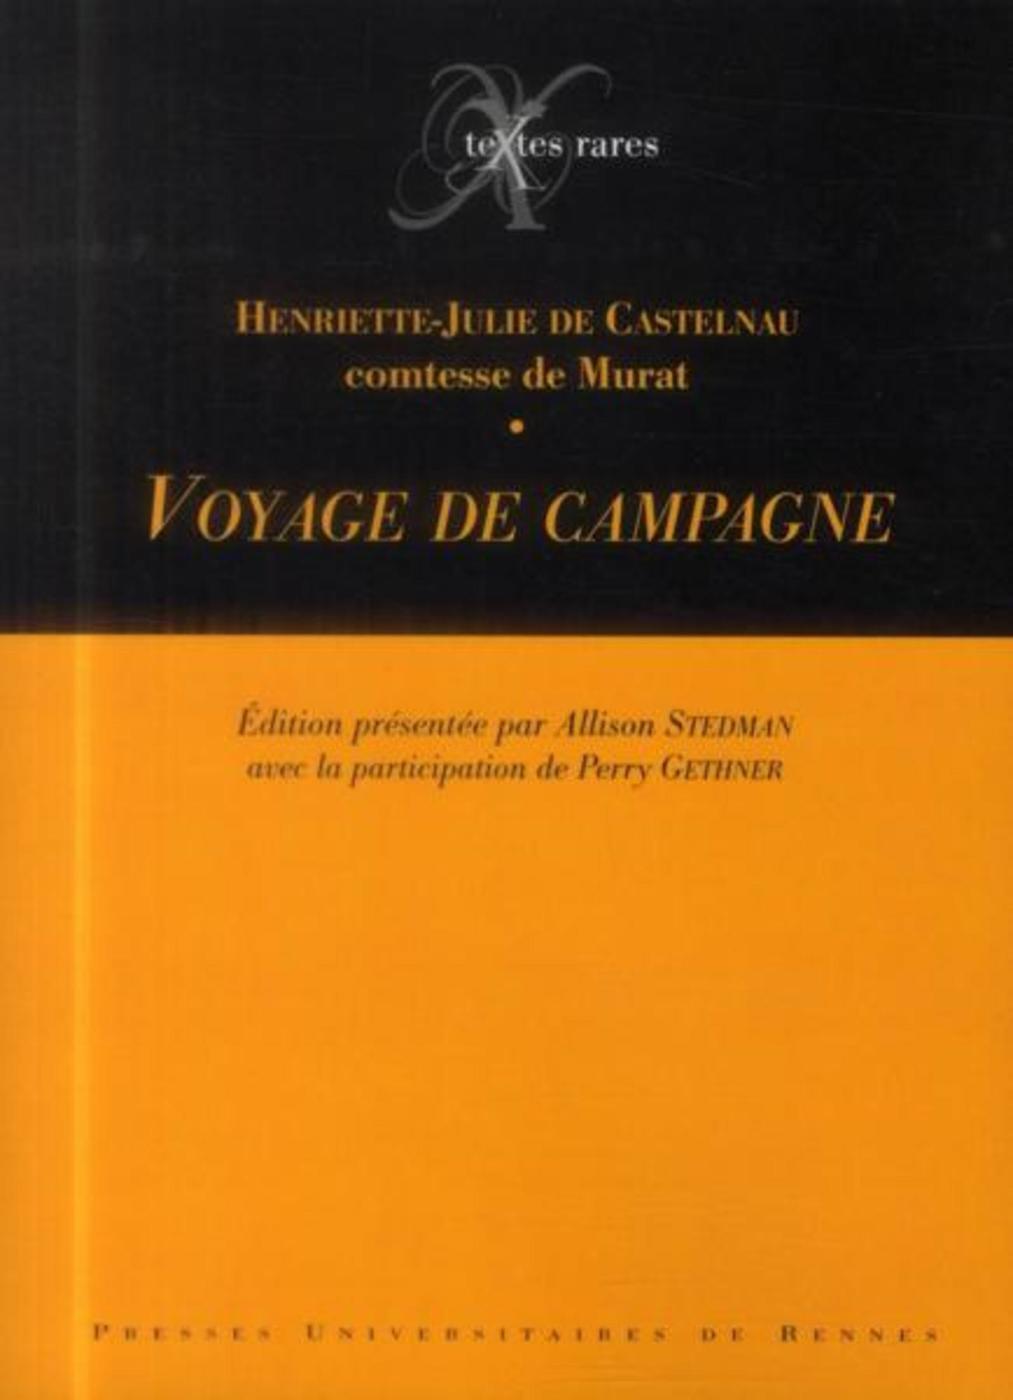 VOYAGE DE CAMPAGNE (9782753529243-front-cover)